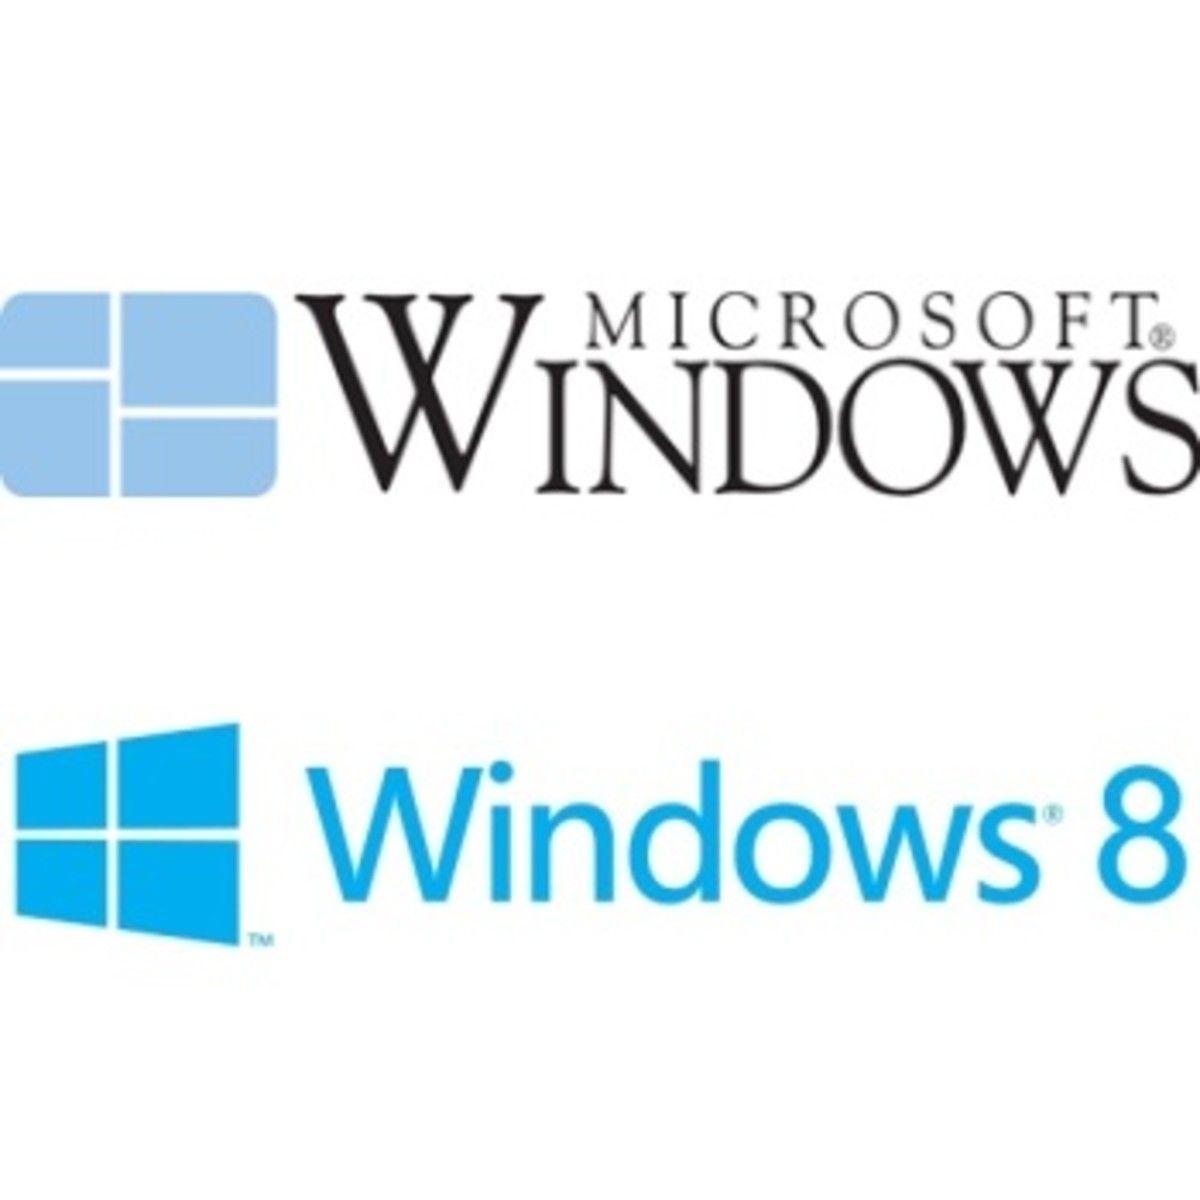 Microsoft Windows 3.1 Logo - Microsoft unveils Windows 8 logo - PC Retail